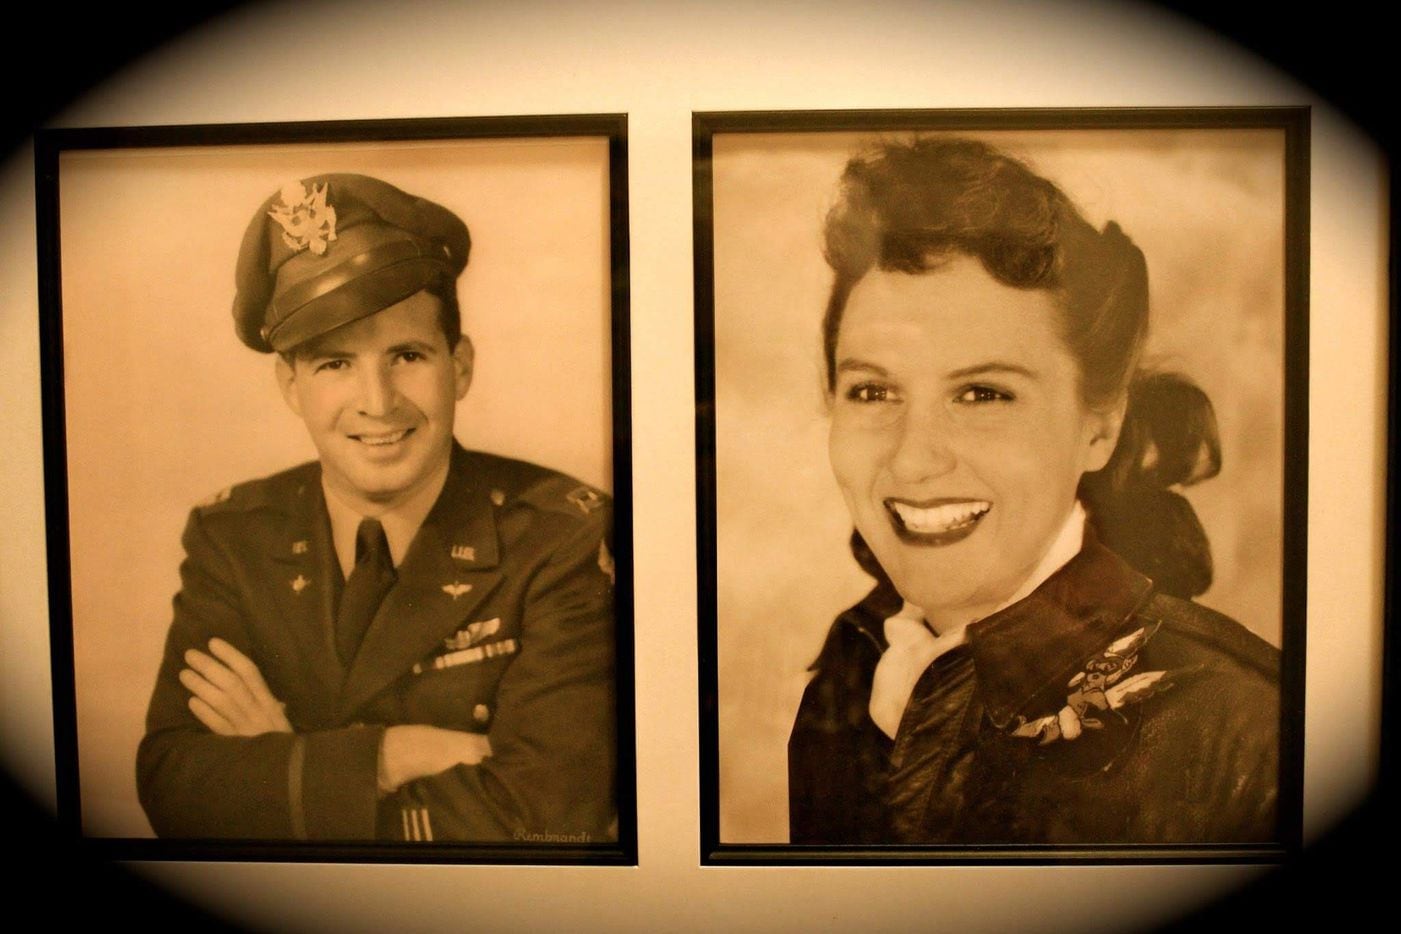 Muriel "Mimi" Lindstrom Segall, left, and her husband Capt. B. Segall, Jr., were both pilots...